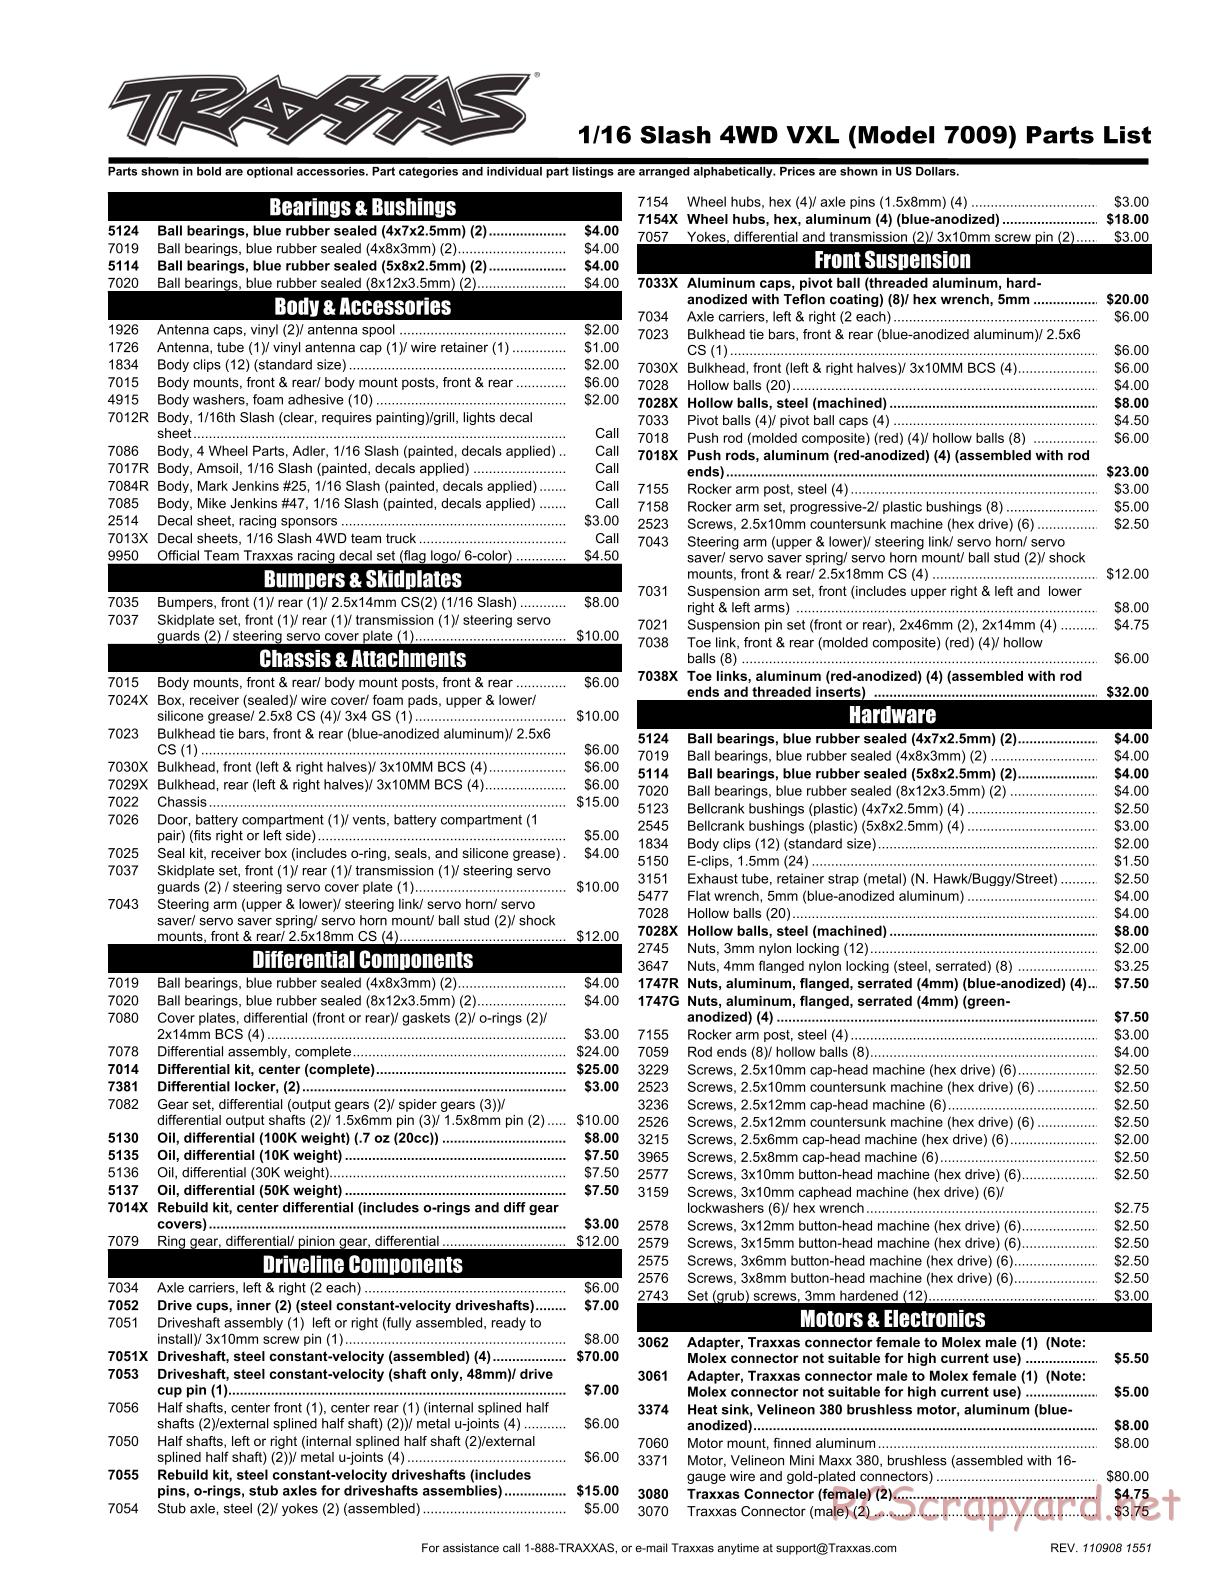 Traxxas - 1/16 Slash 4x4 VXL (2011) - Parts List - Page 1